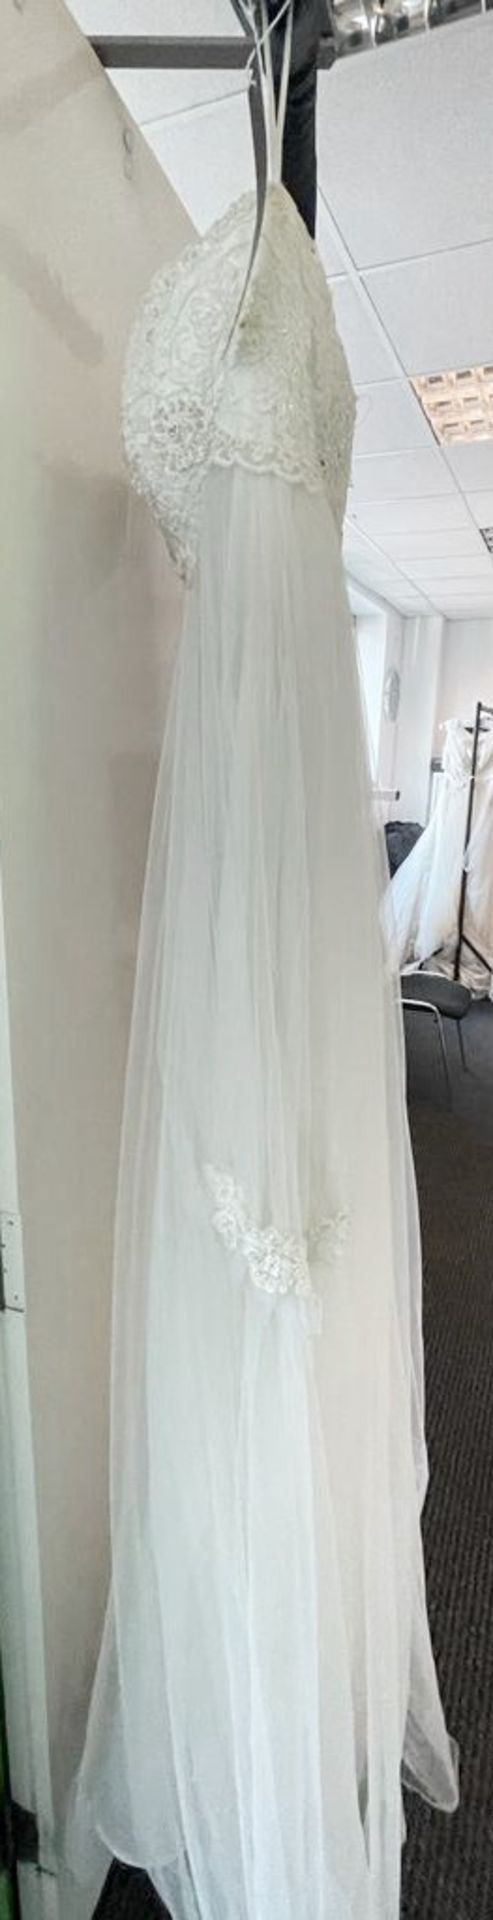 1 x MARIA SOTIRIOU 'Hyri' Stunning Silk Strapless Designer Wedding Dress Bridal Gown In Lace - - Image 10 of 12